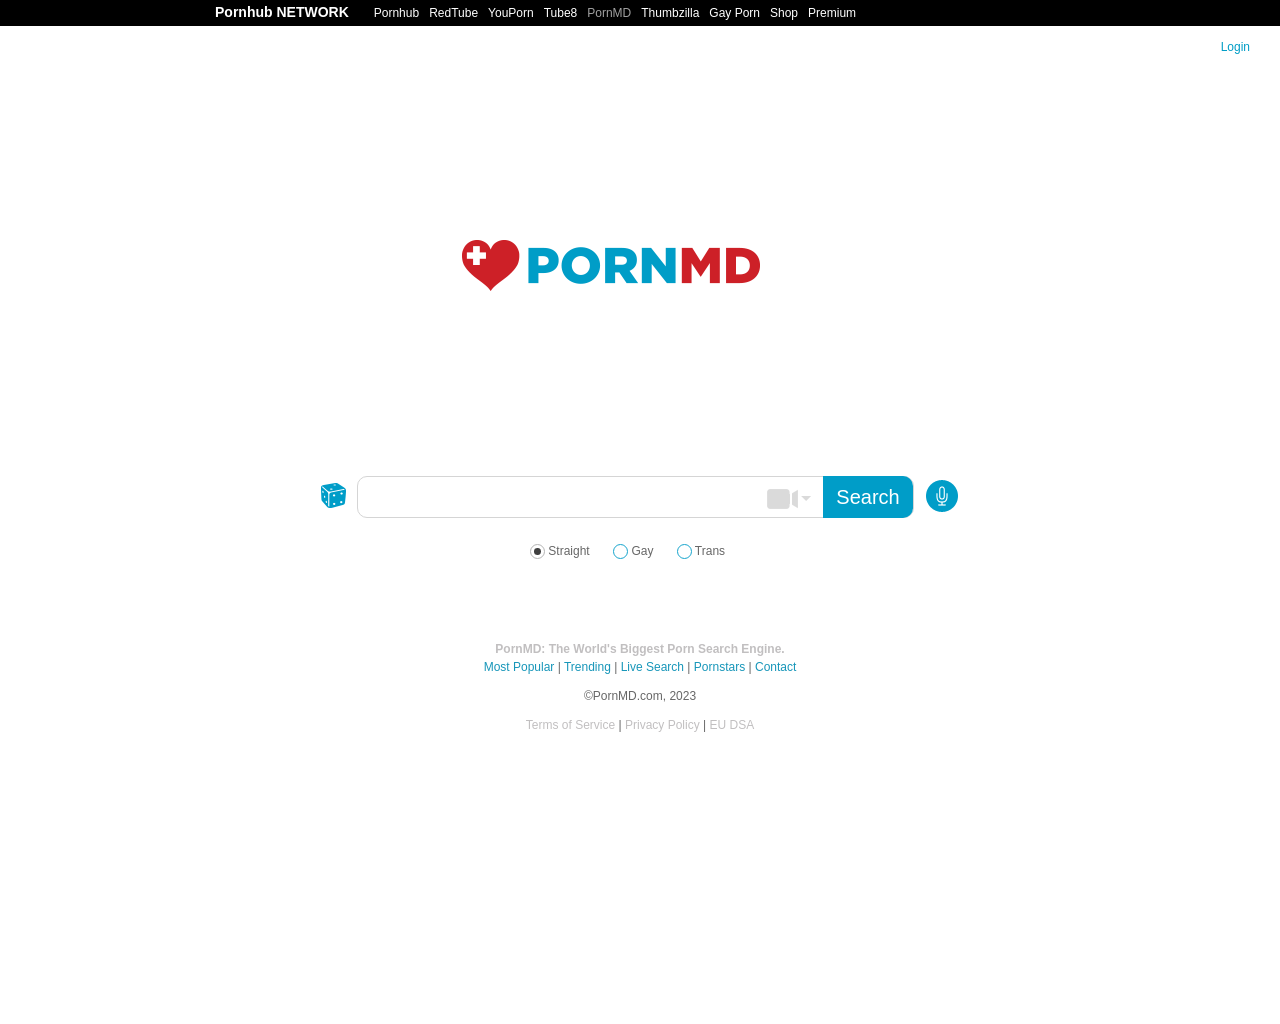 www.pornmd.com